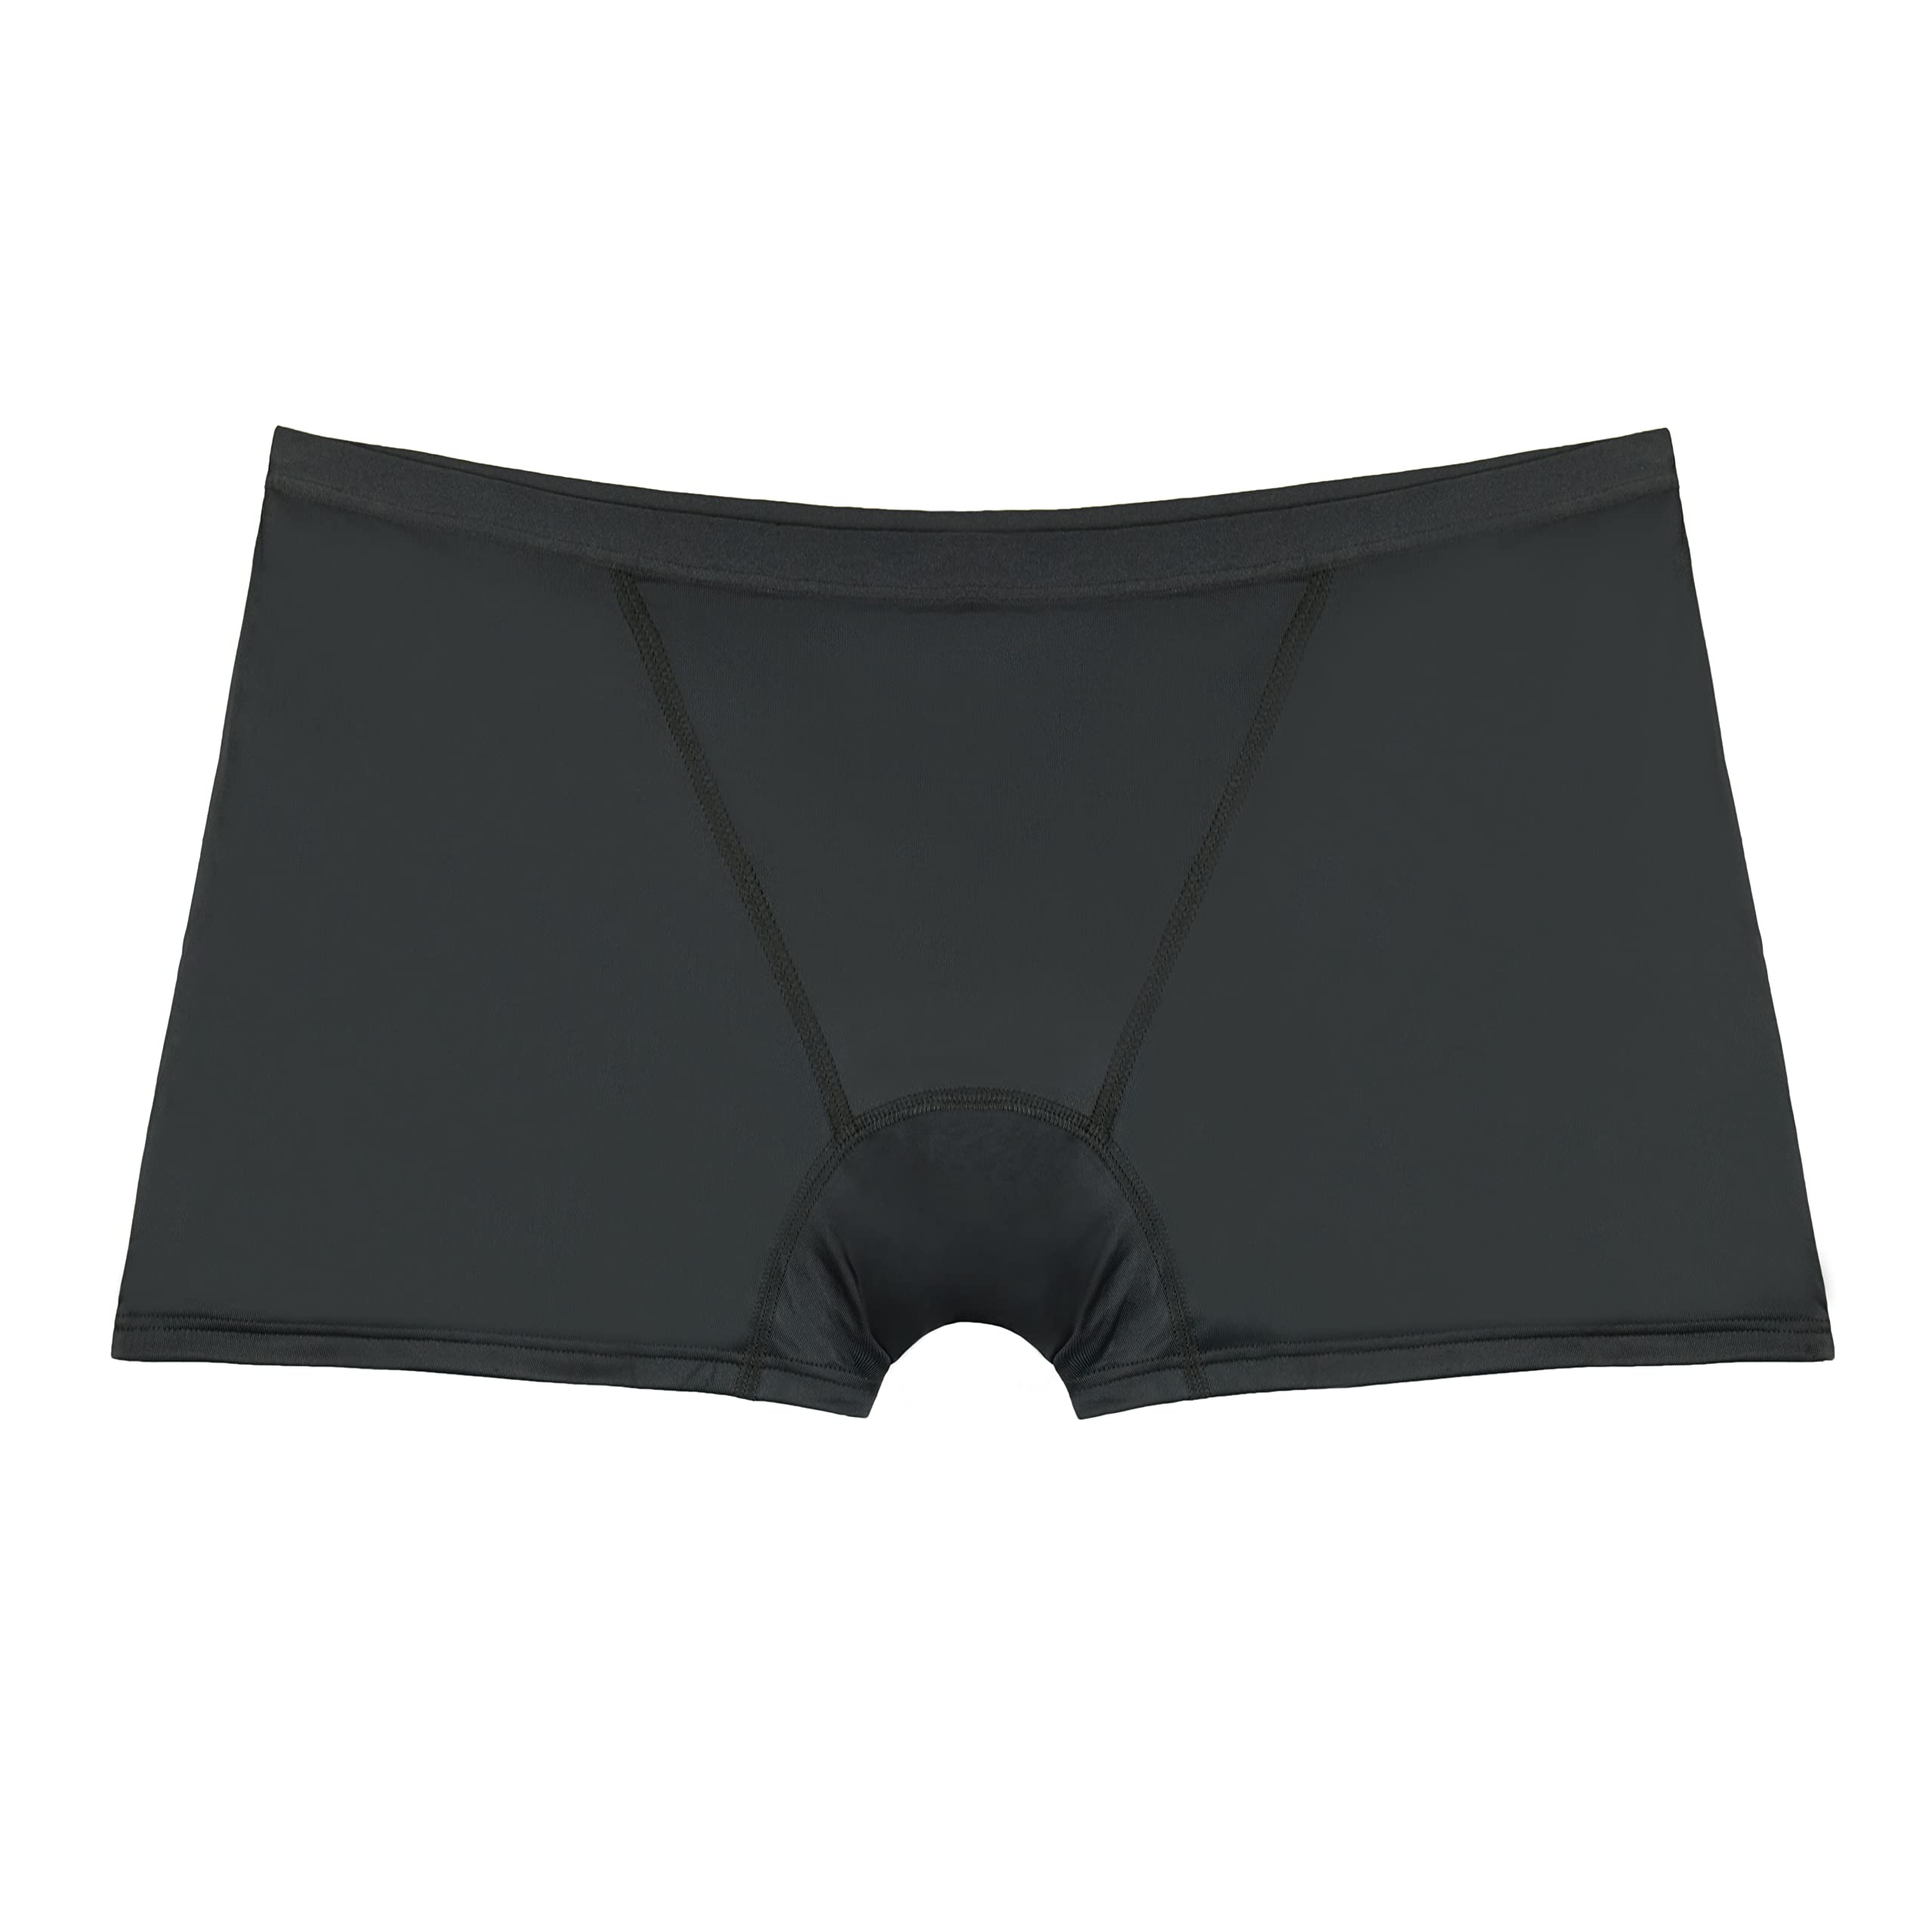 THINX Boyshort Period Underwear for Women FSA HSA Approved Feminine Care Menstrual  Underwear Holds 3 Tampons